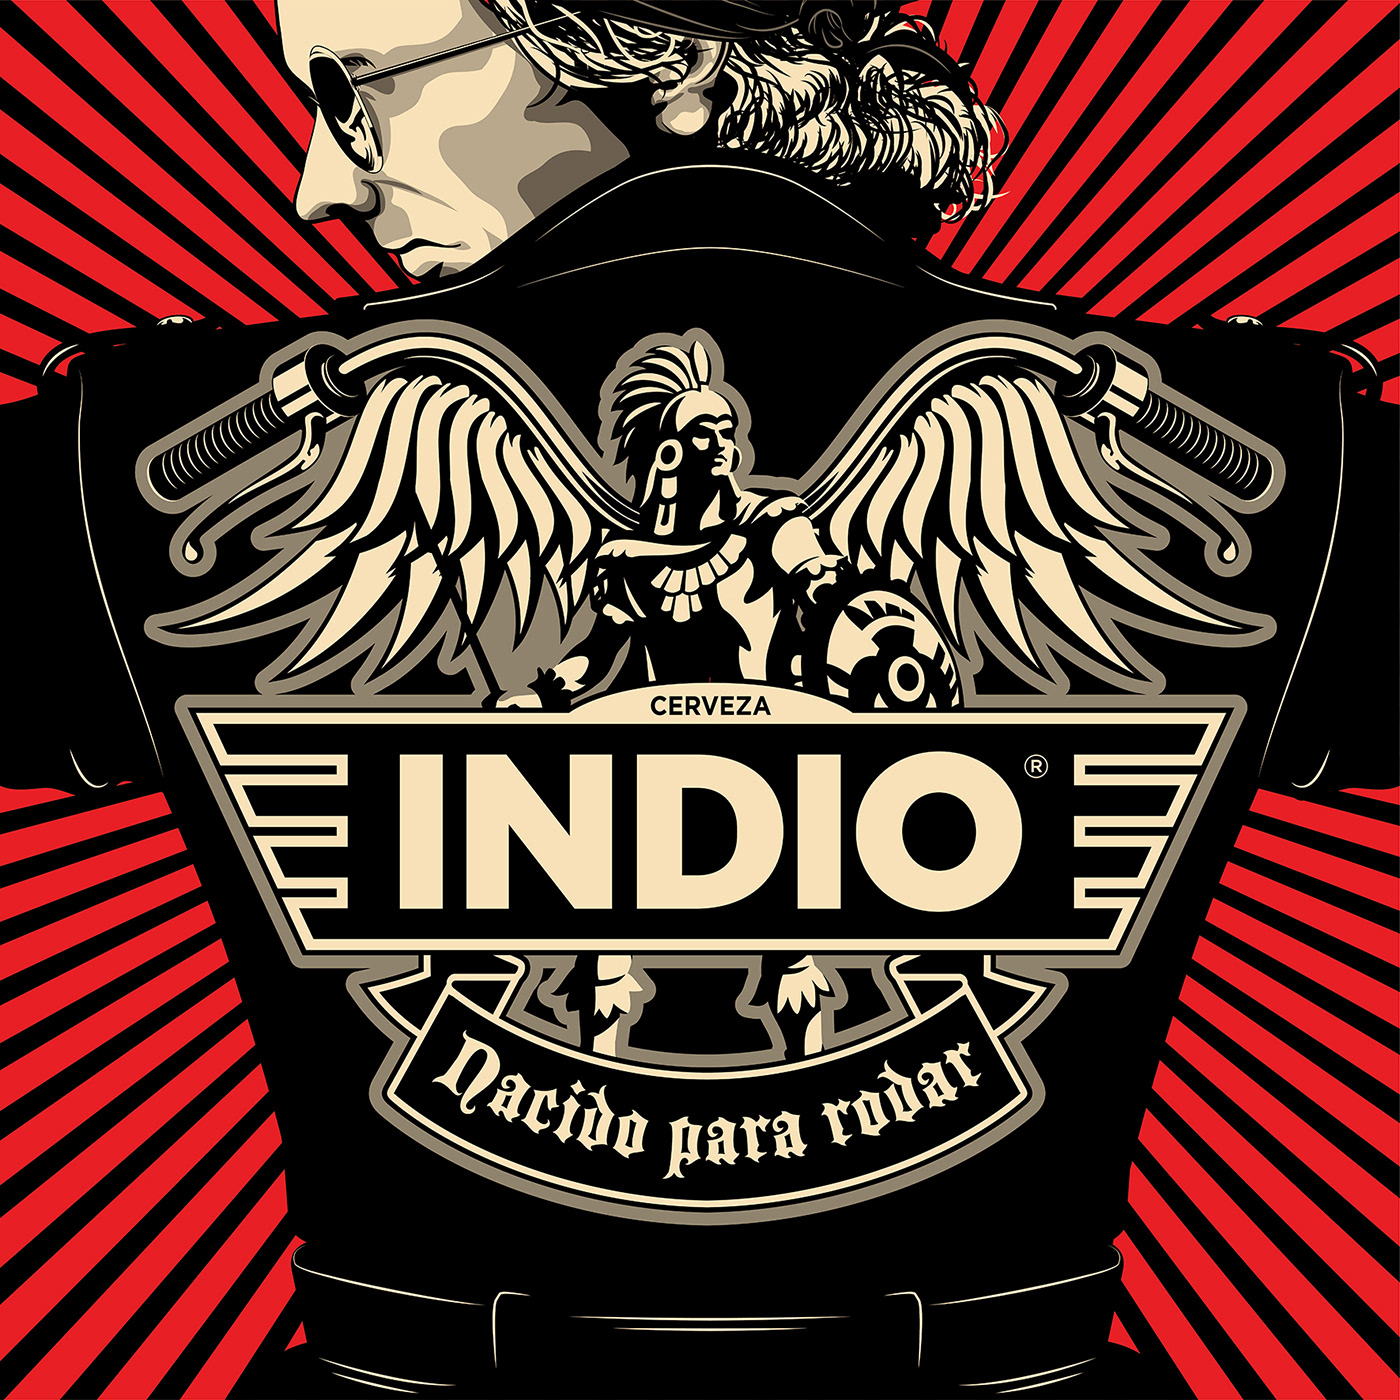 indio cerveza Cerveza Indio beer beer design beer label ilustracion ILLUSTRATION  chopper motorcycle